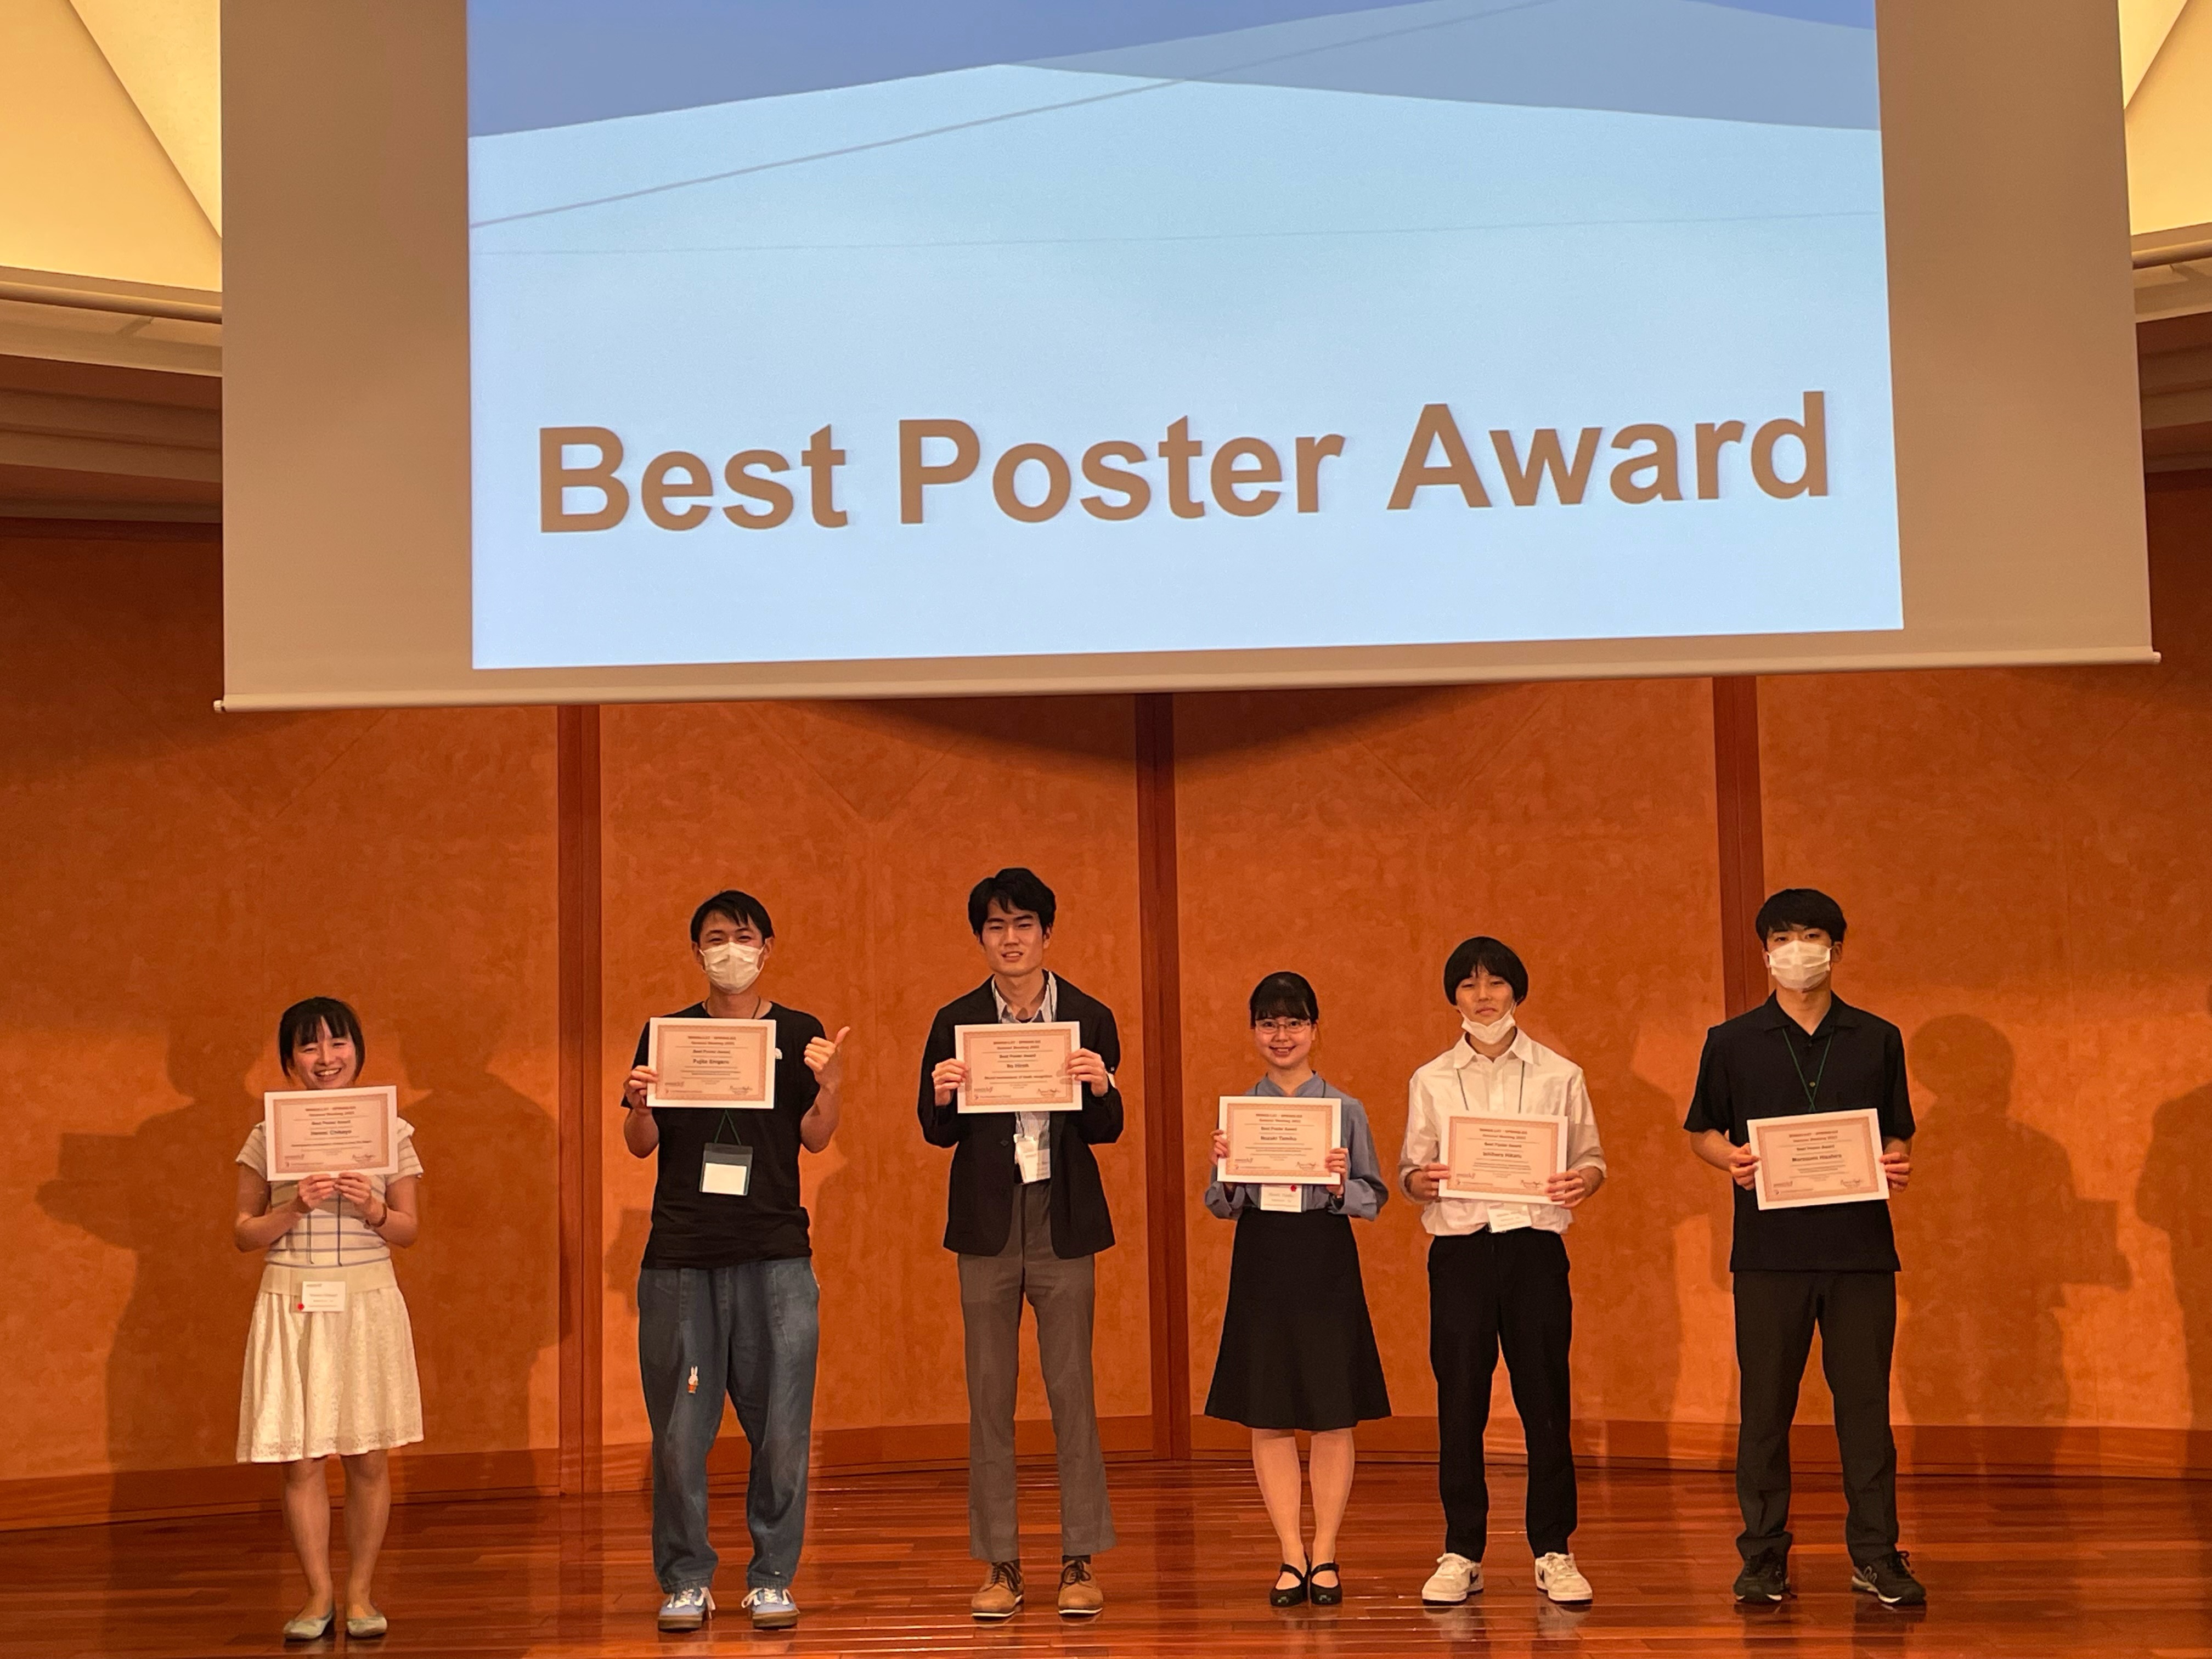 Best Poster Award